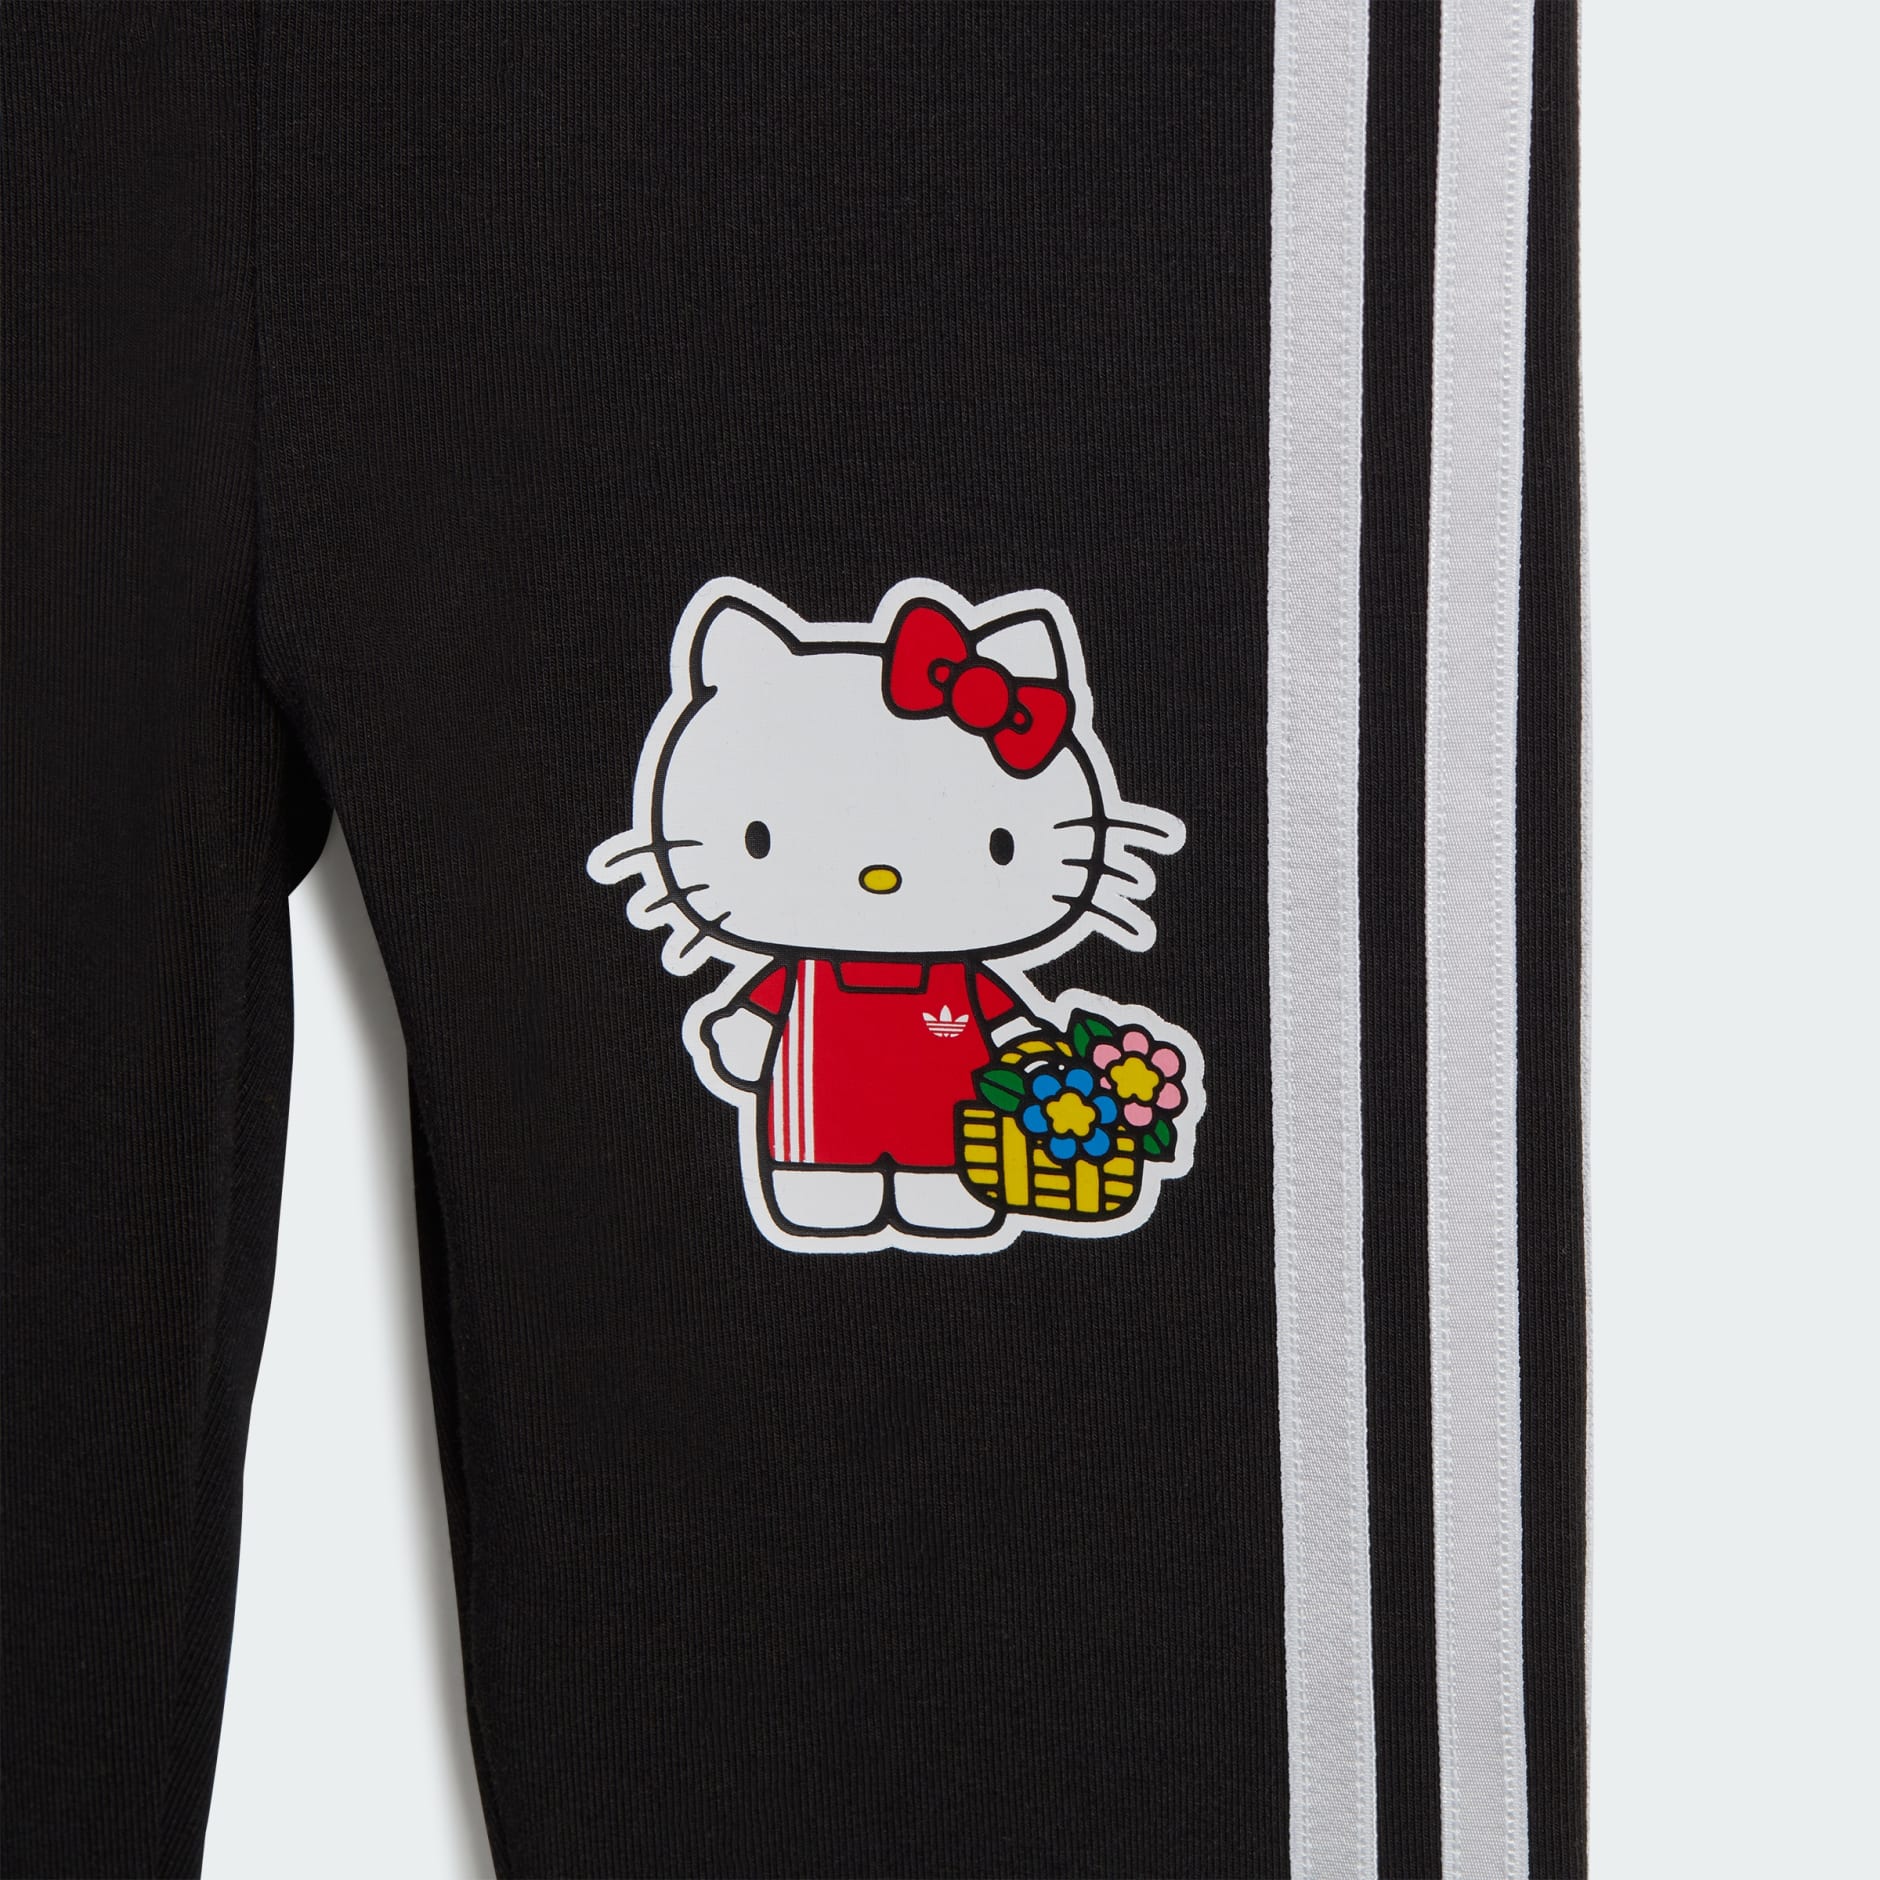 Kids Clothing - adidas Originals x Hello Kitty Tee Dress Legging